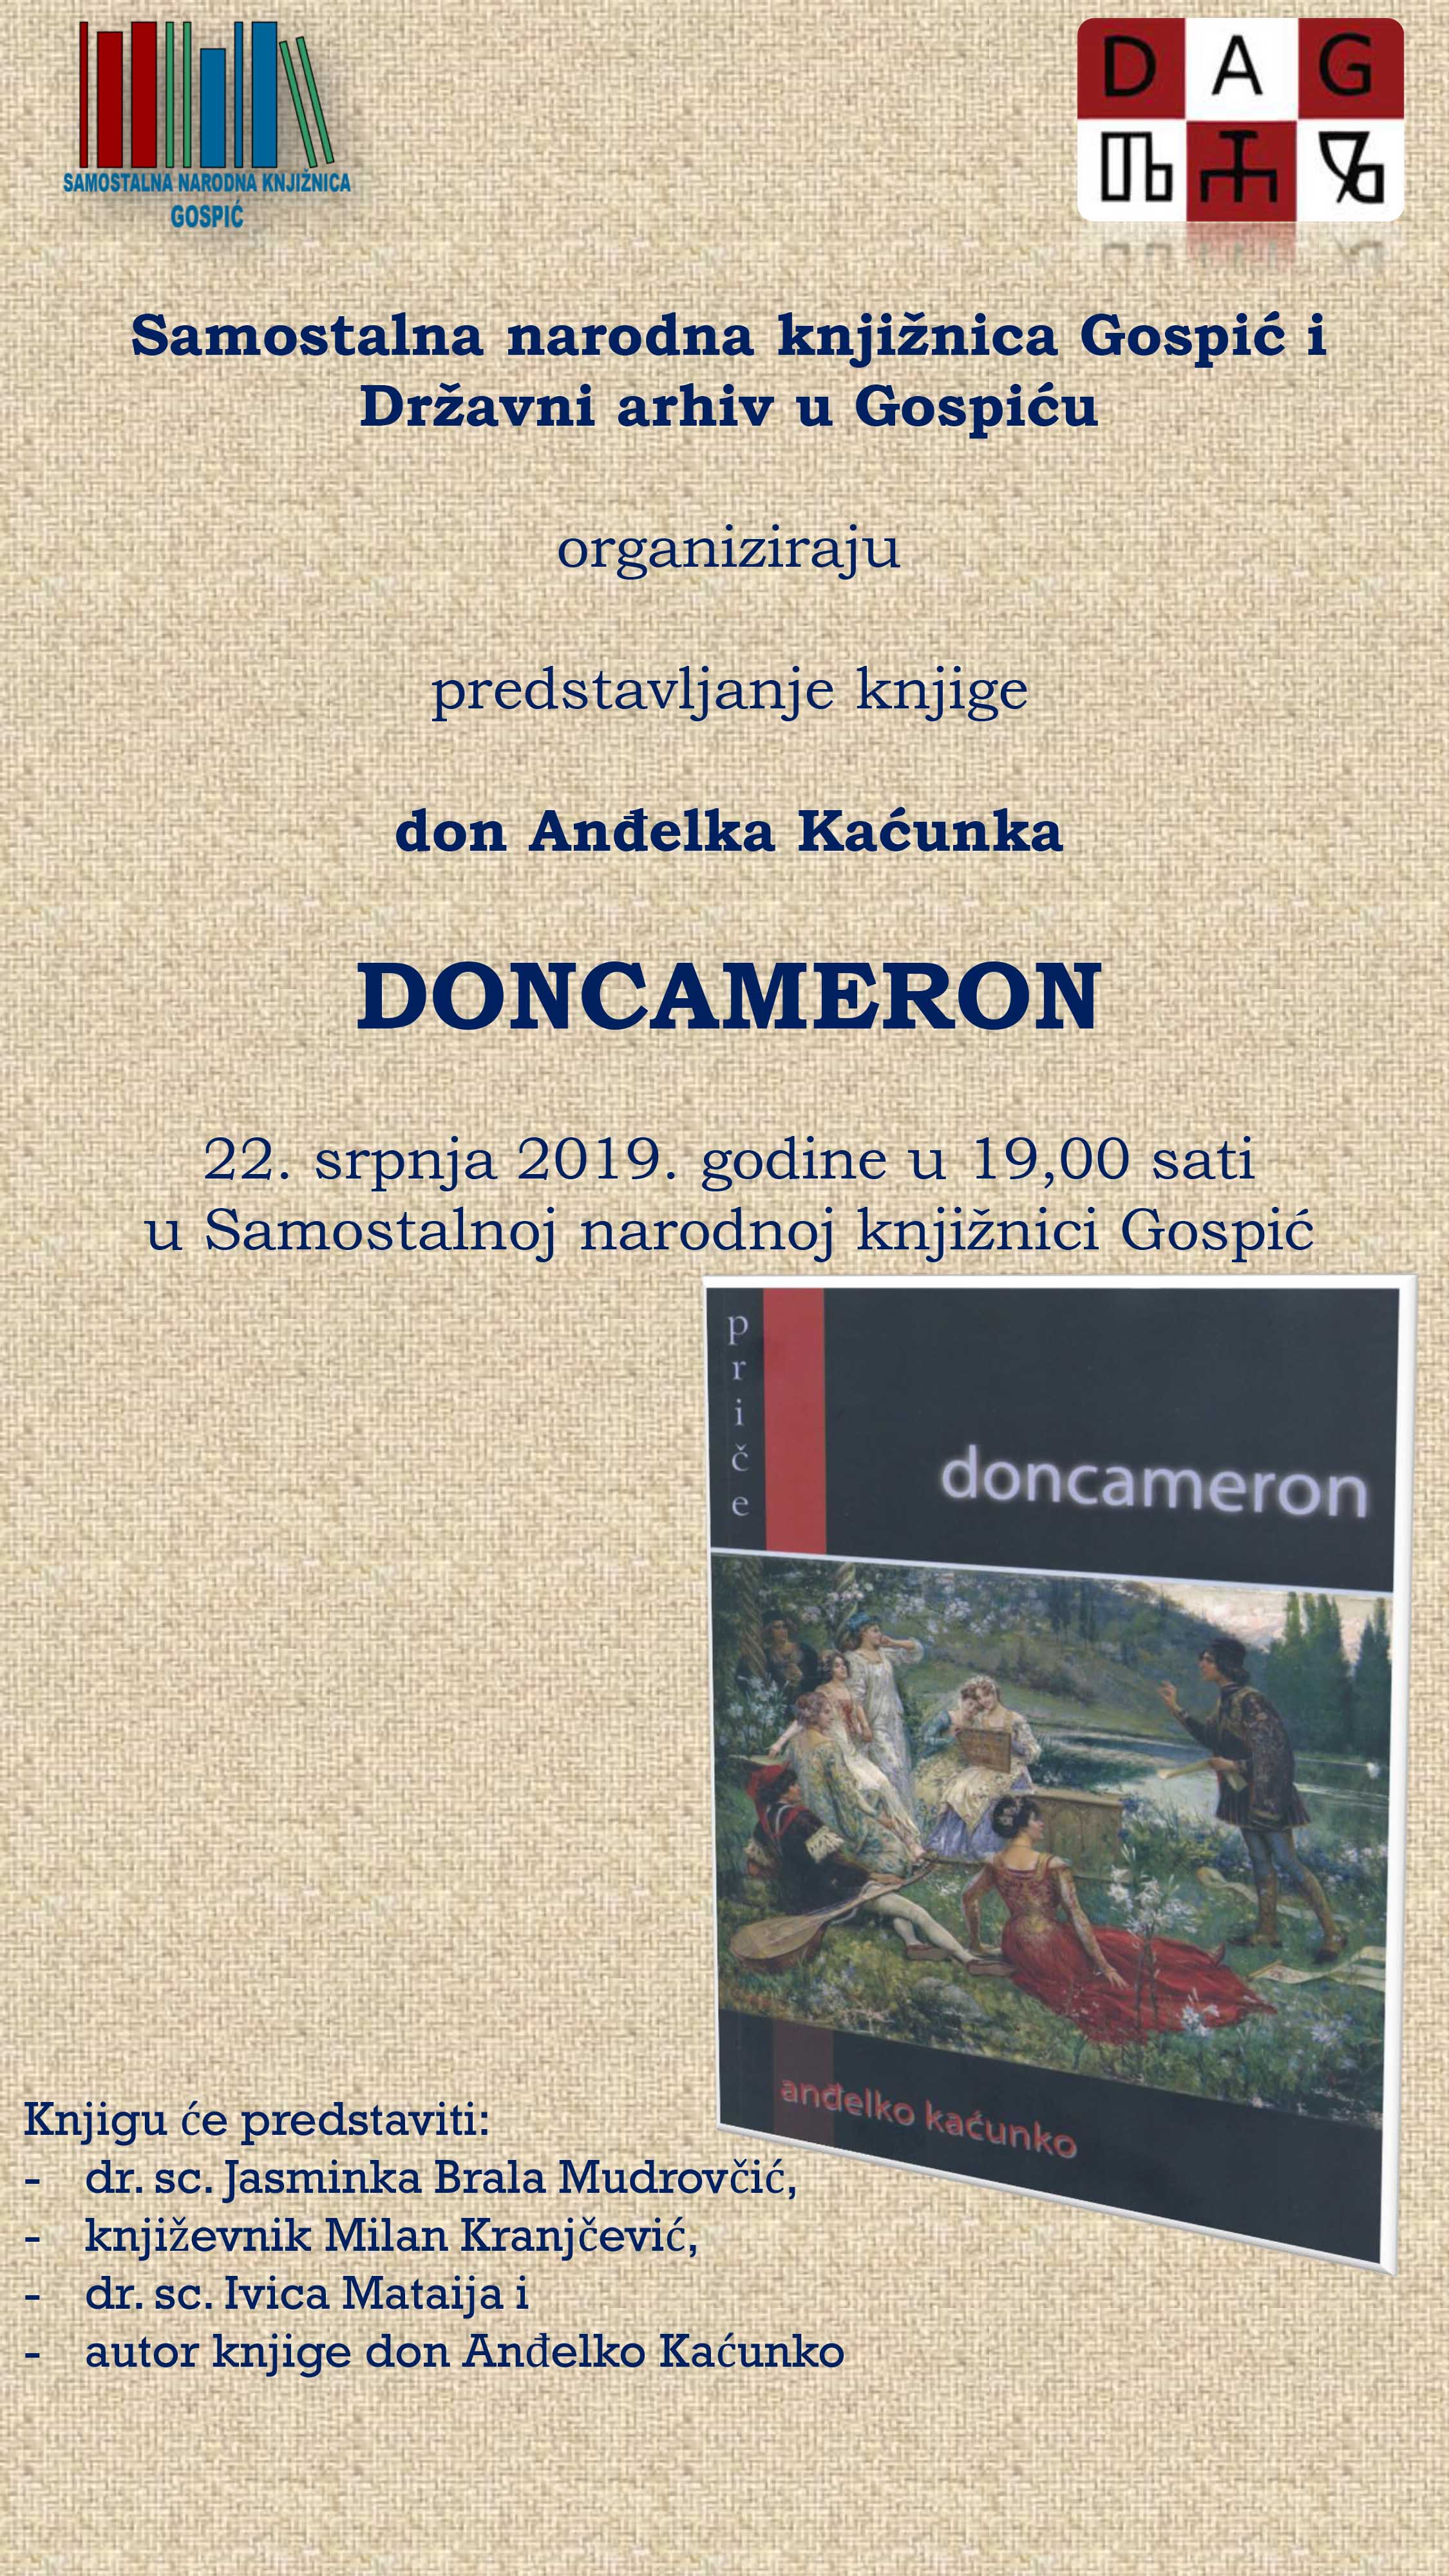 Predstavljanje knjige – Doncameron